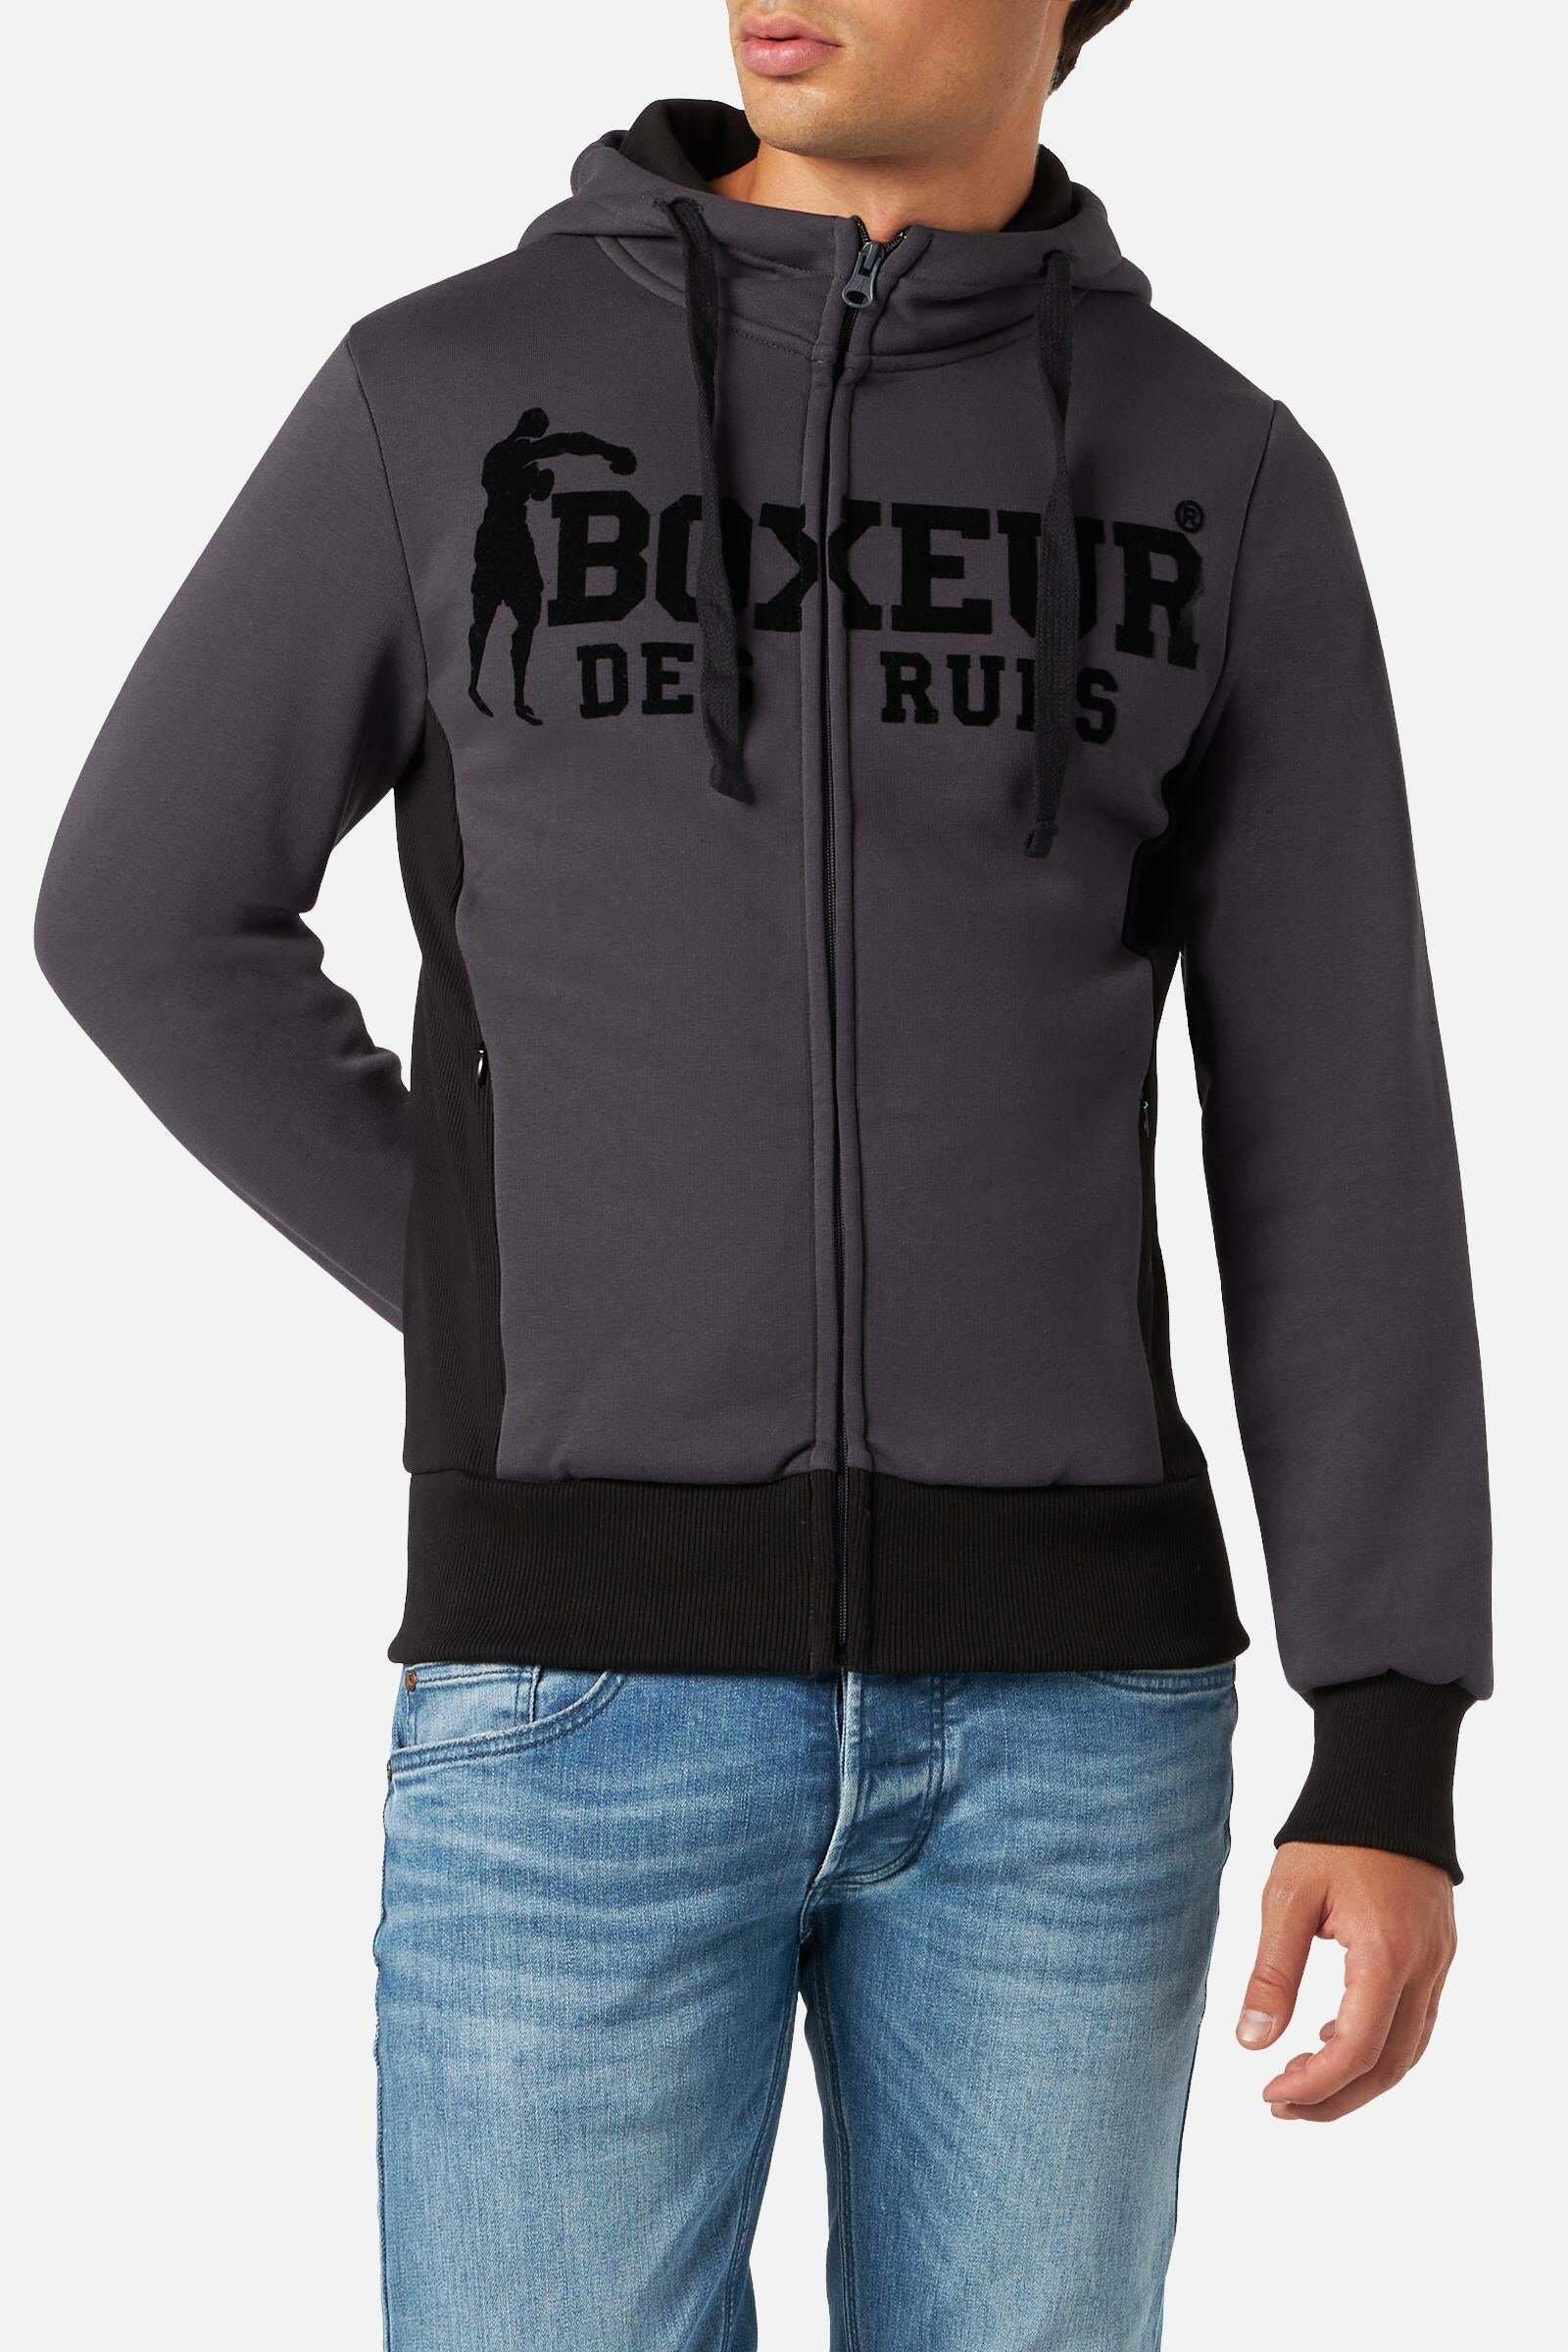 Sweatshirts Hooded Full Zip Sweatshirt Herren Taubengrau XL von BOXEUR DES RUES